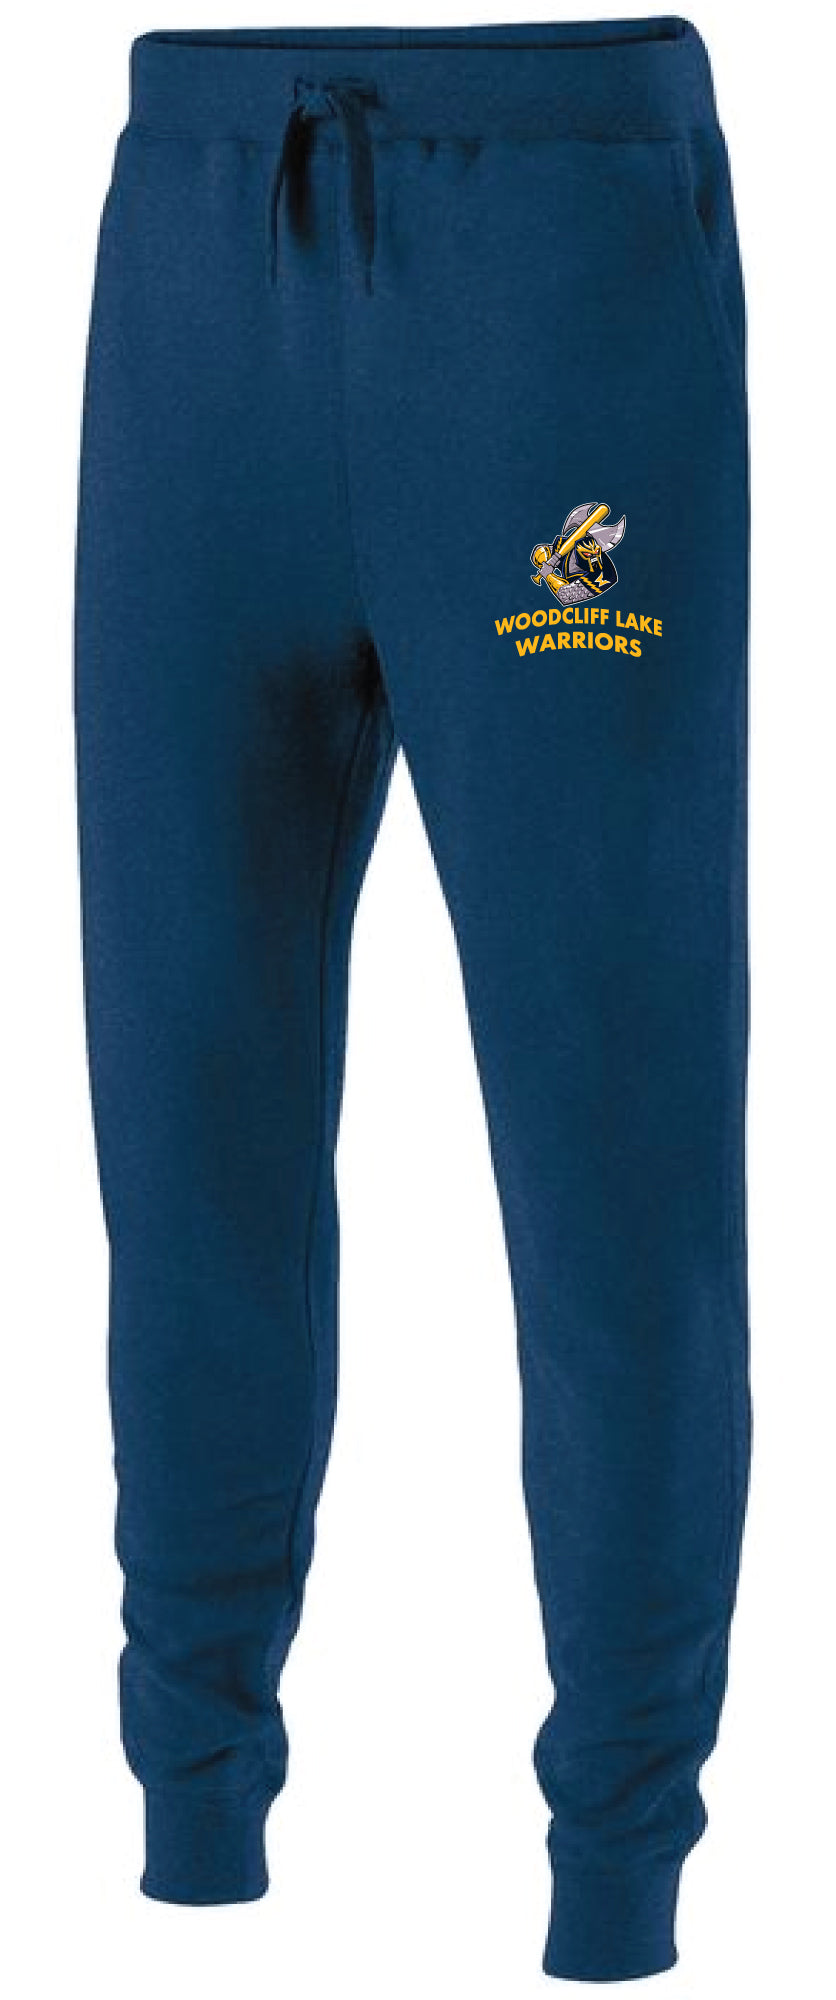 Woodcliff Lake Baseball Jogger Pants - Navy - 5KounT2018